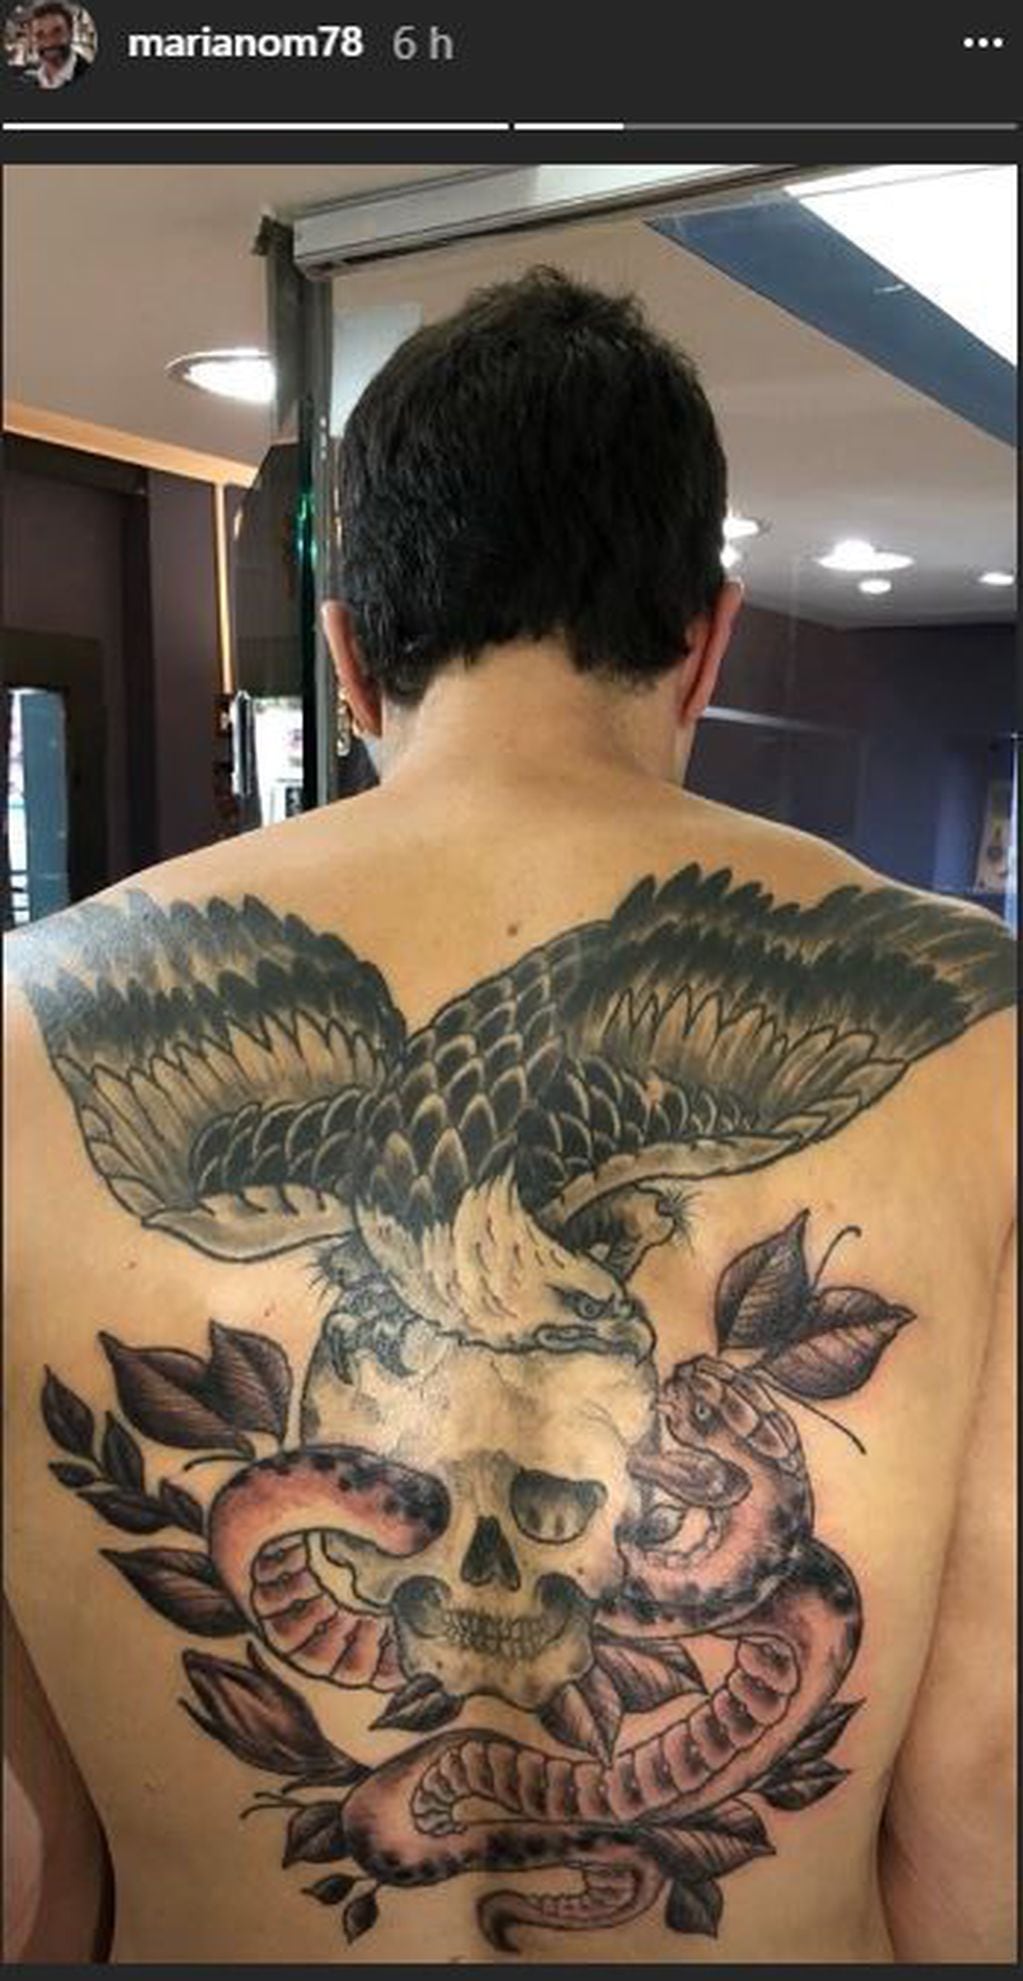 Mariano Martinez tattoo (Instagram)